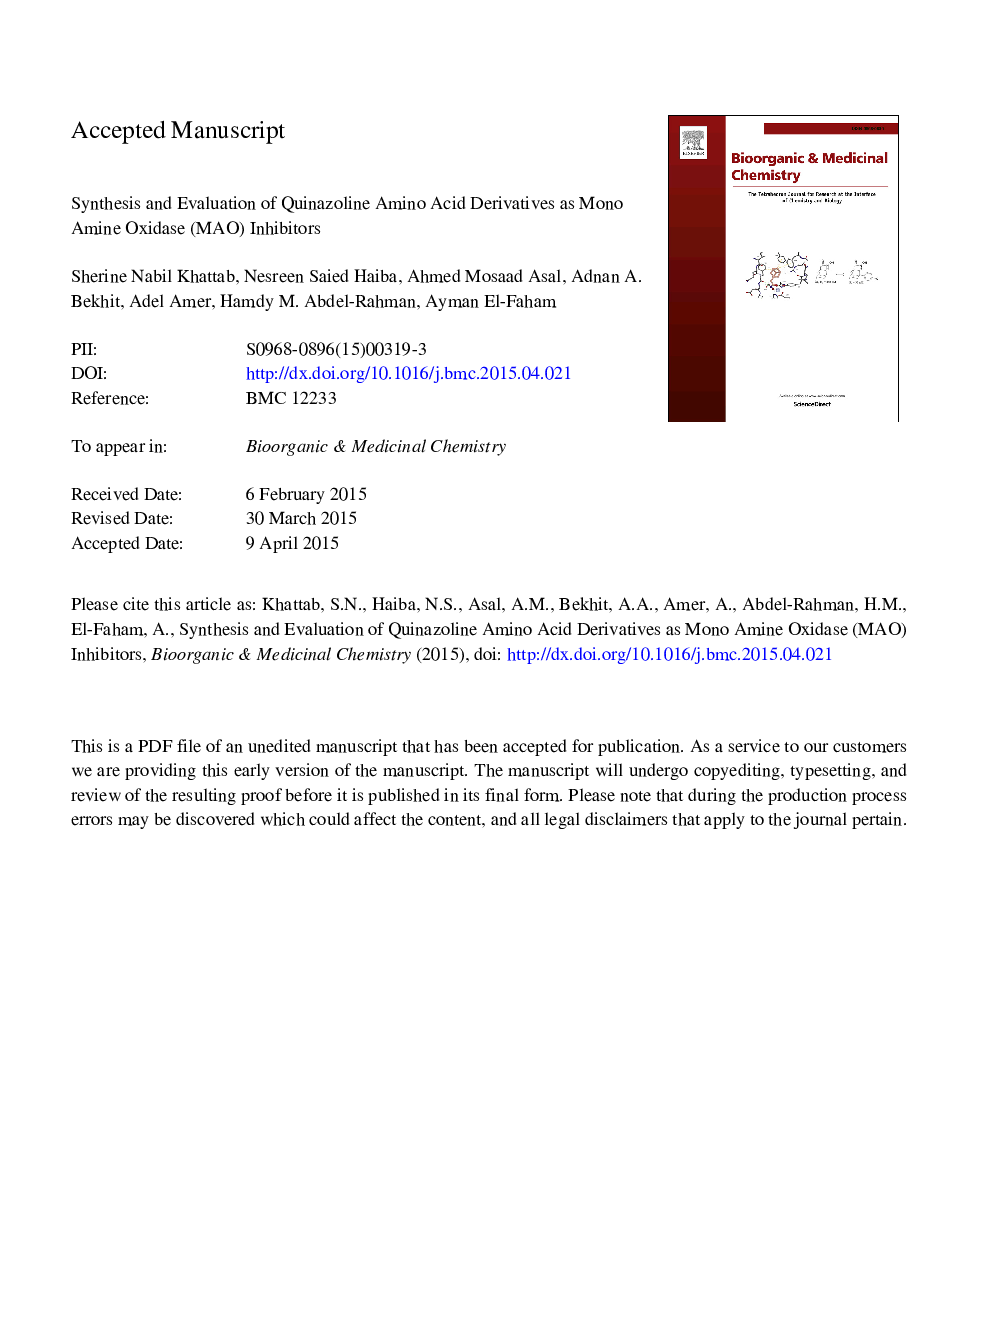 Synthesis and evaluation of quinazoline amino acid derivatives as mono amine oxidase (MAO) inhibitors